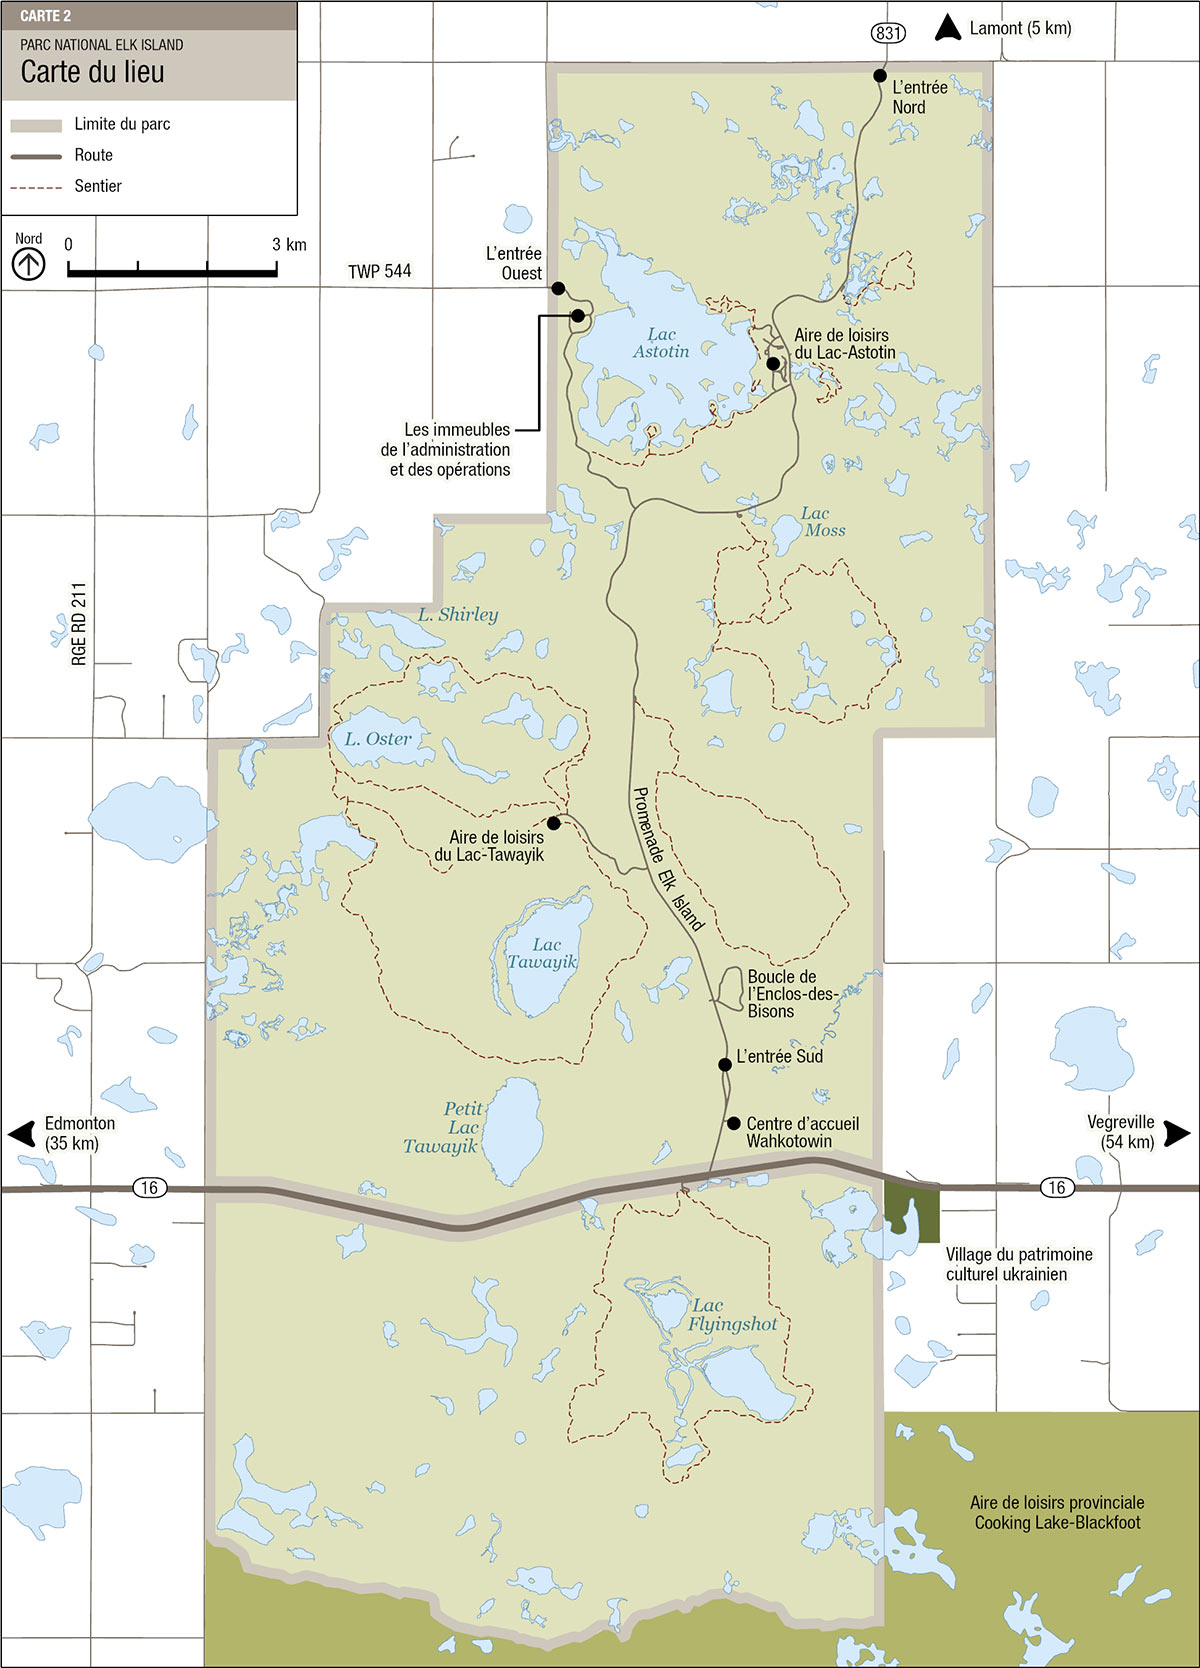 Carte du lieu du Parc national Elk Island